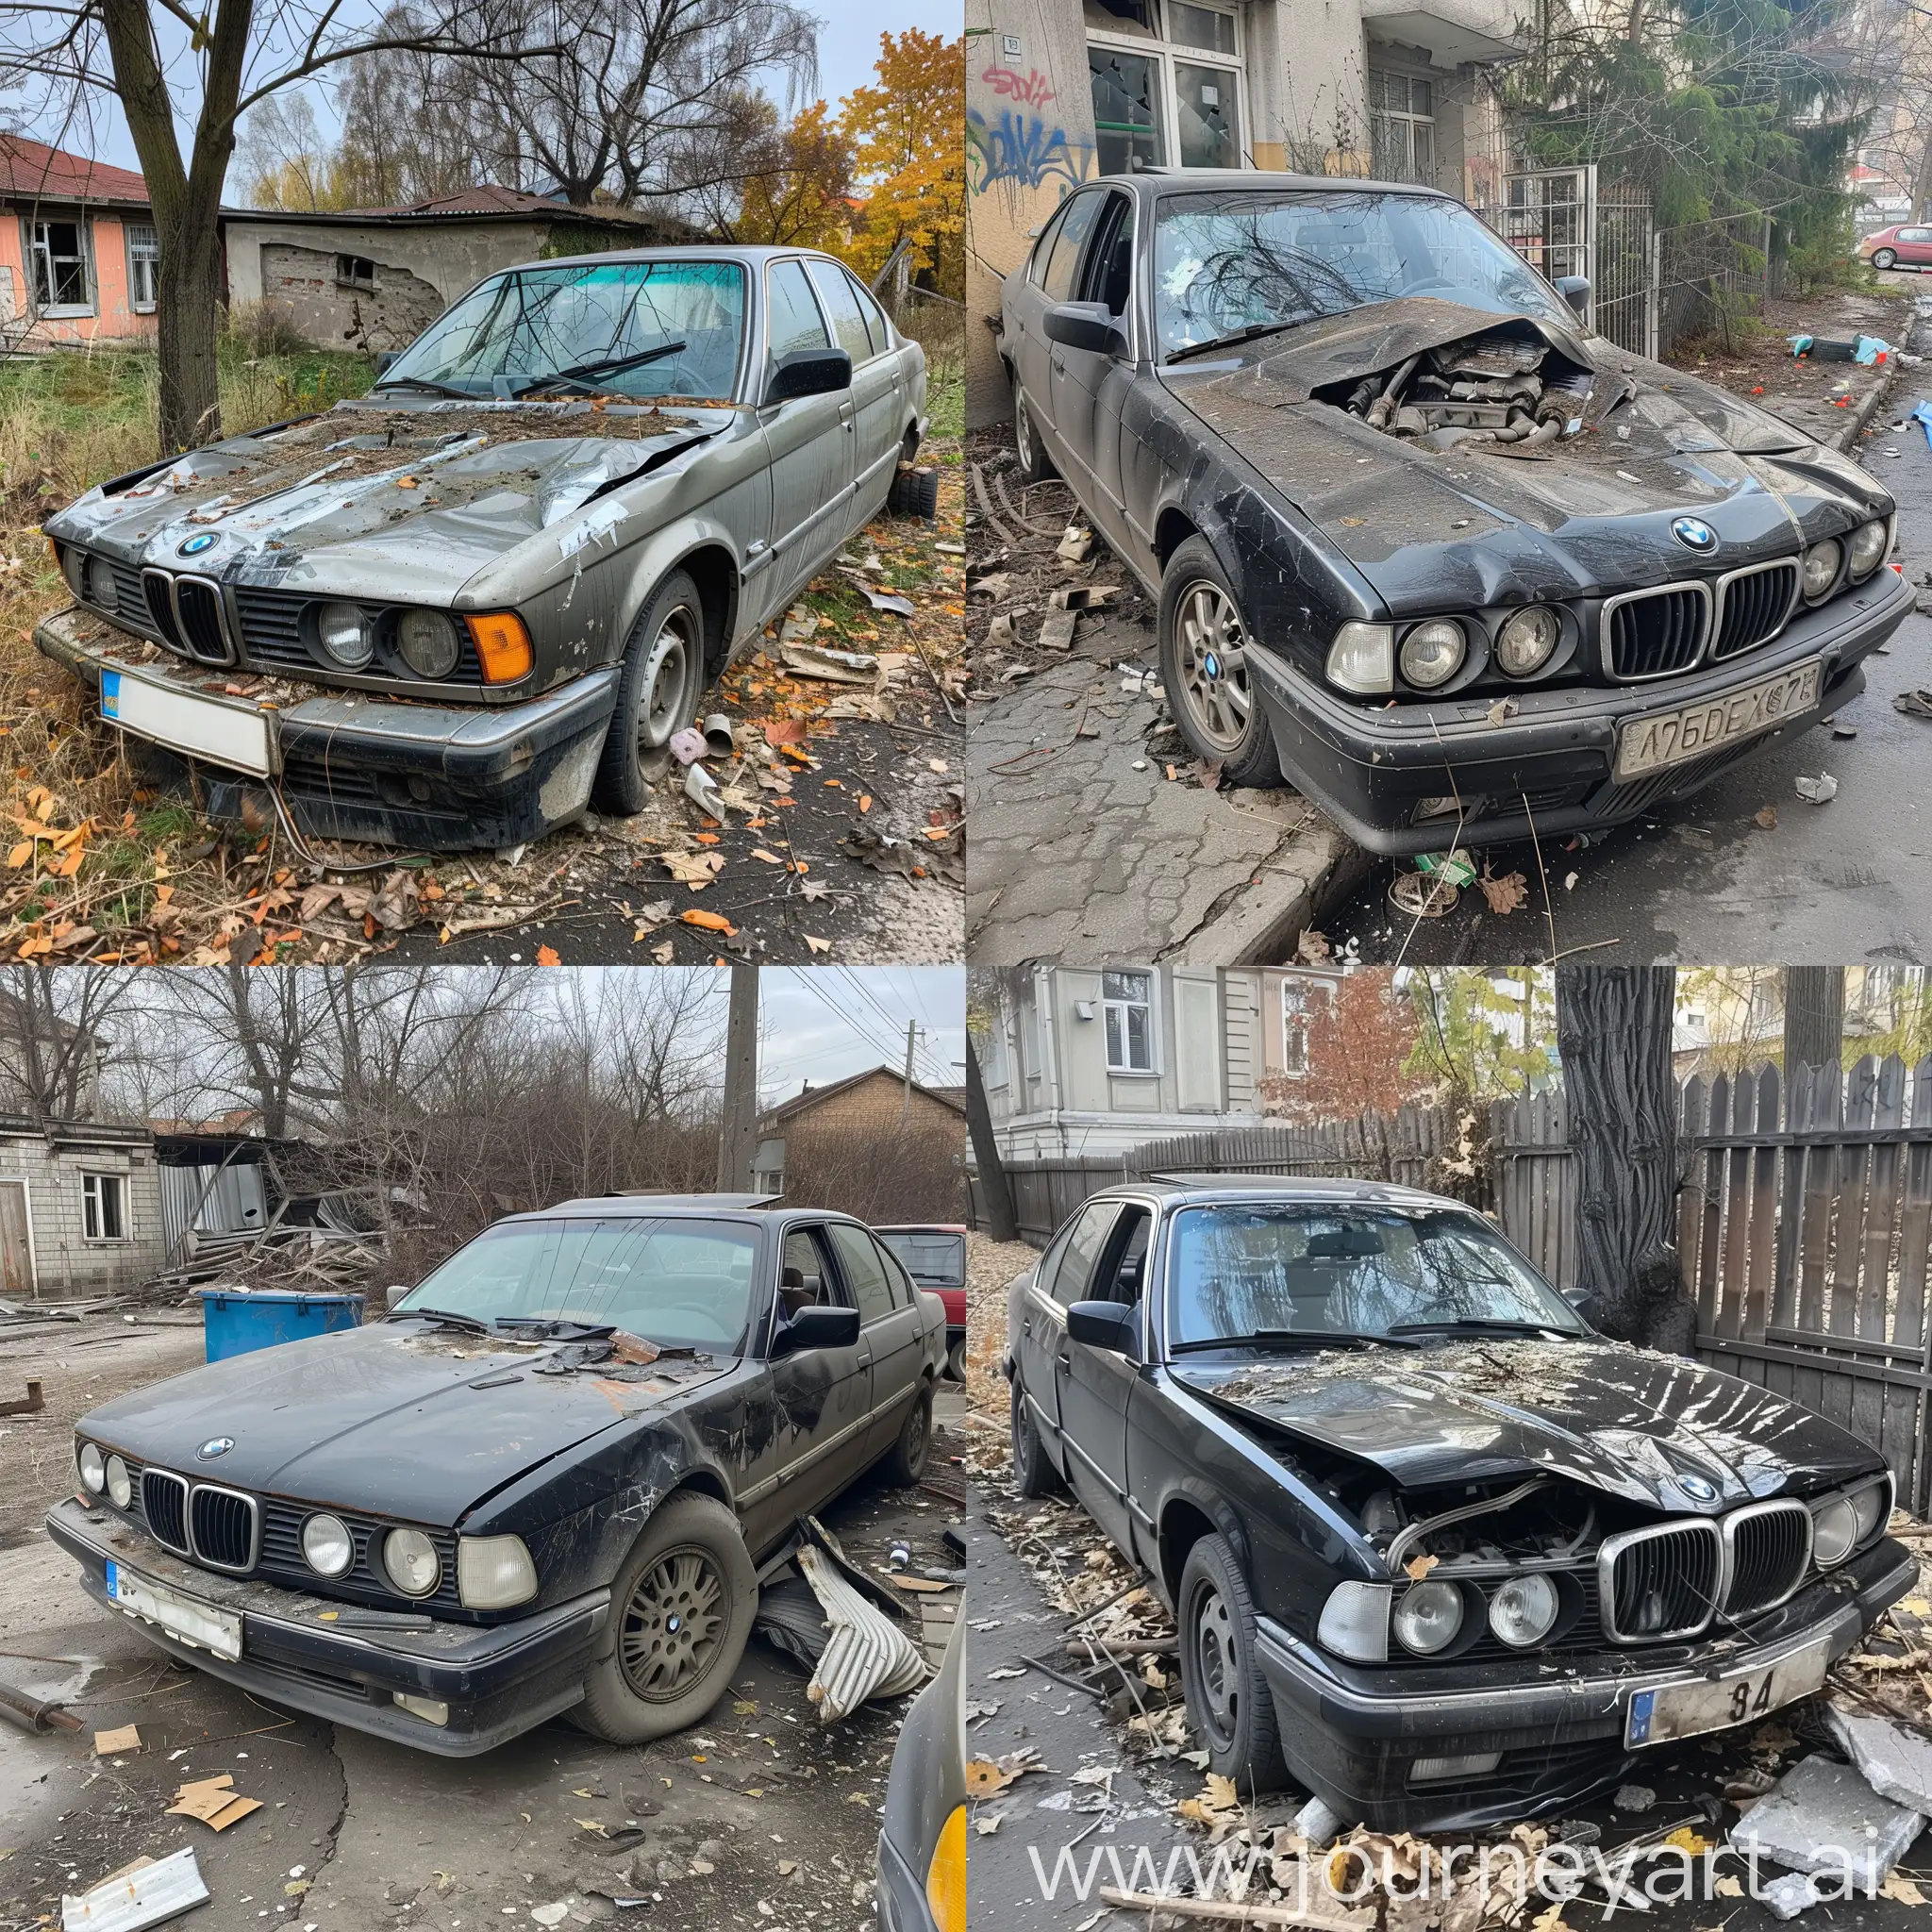 Damaged-BMW-5-Series-E34-Near-Luxury-Home